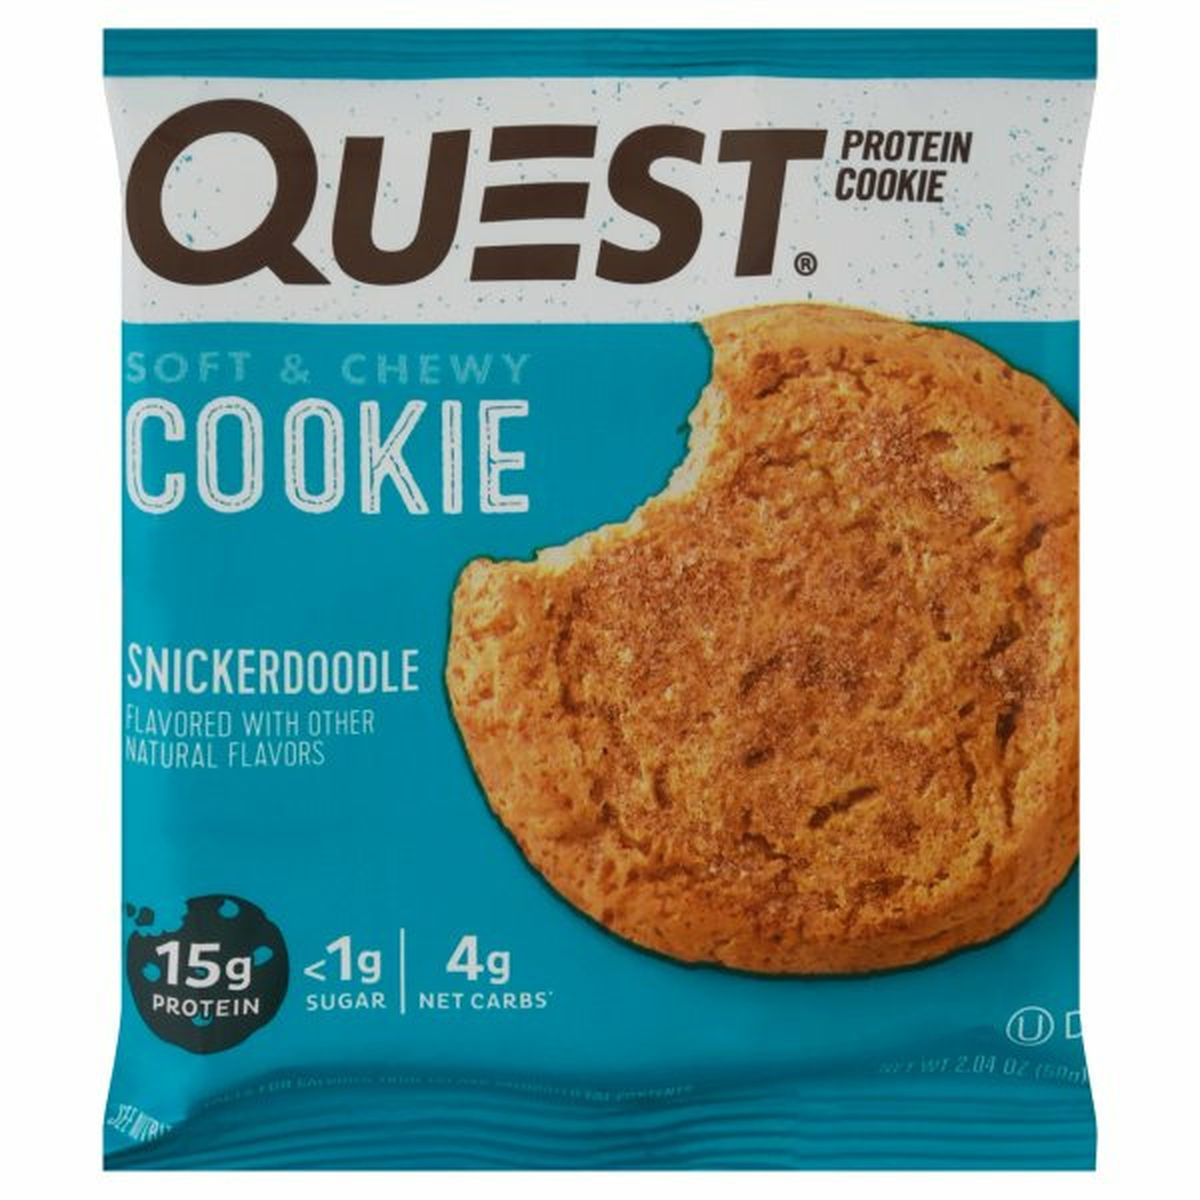 Calories in Quest Protein Cookie, Snickerdoodle